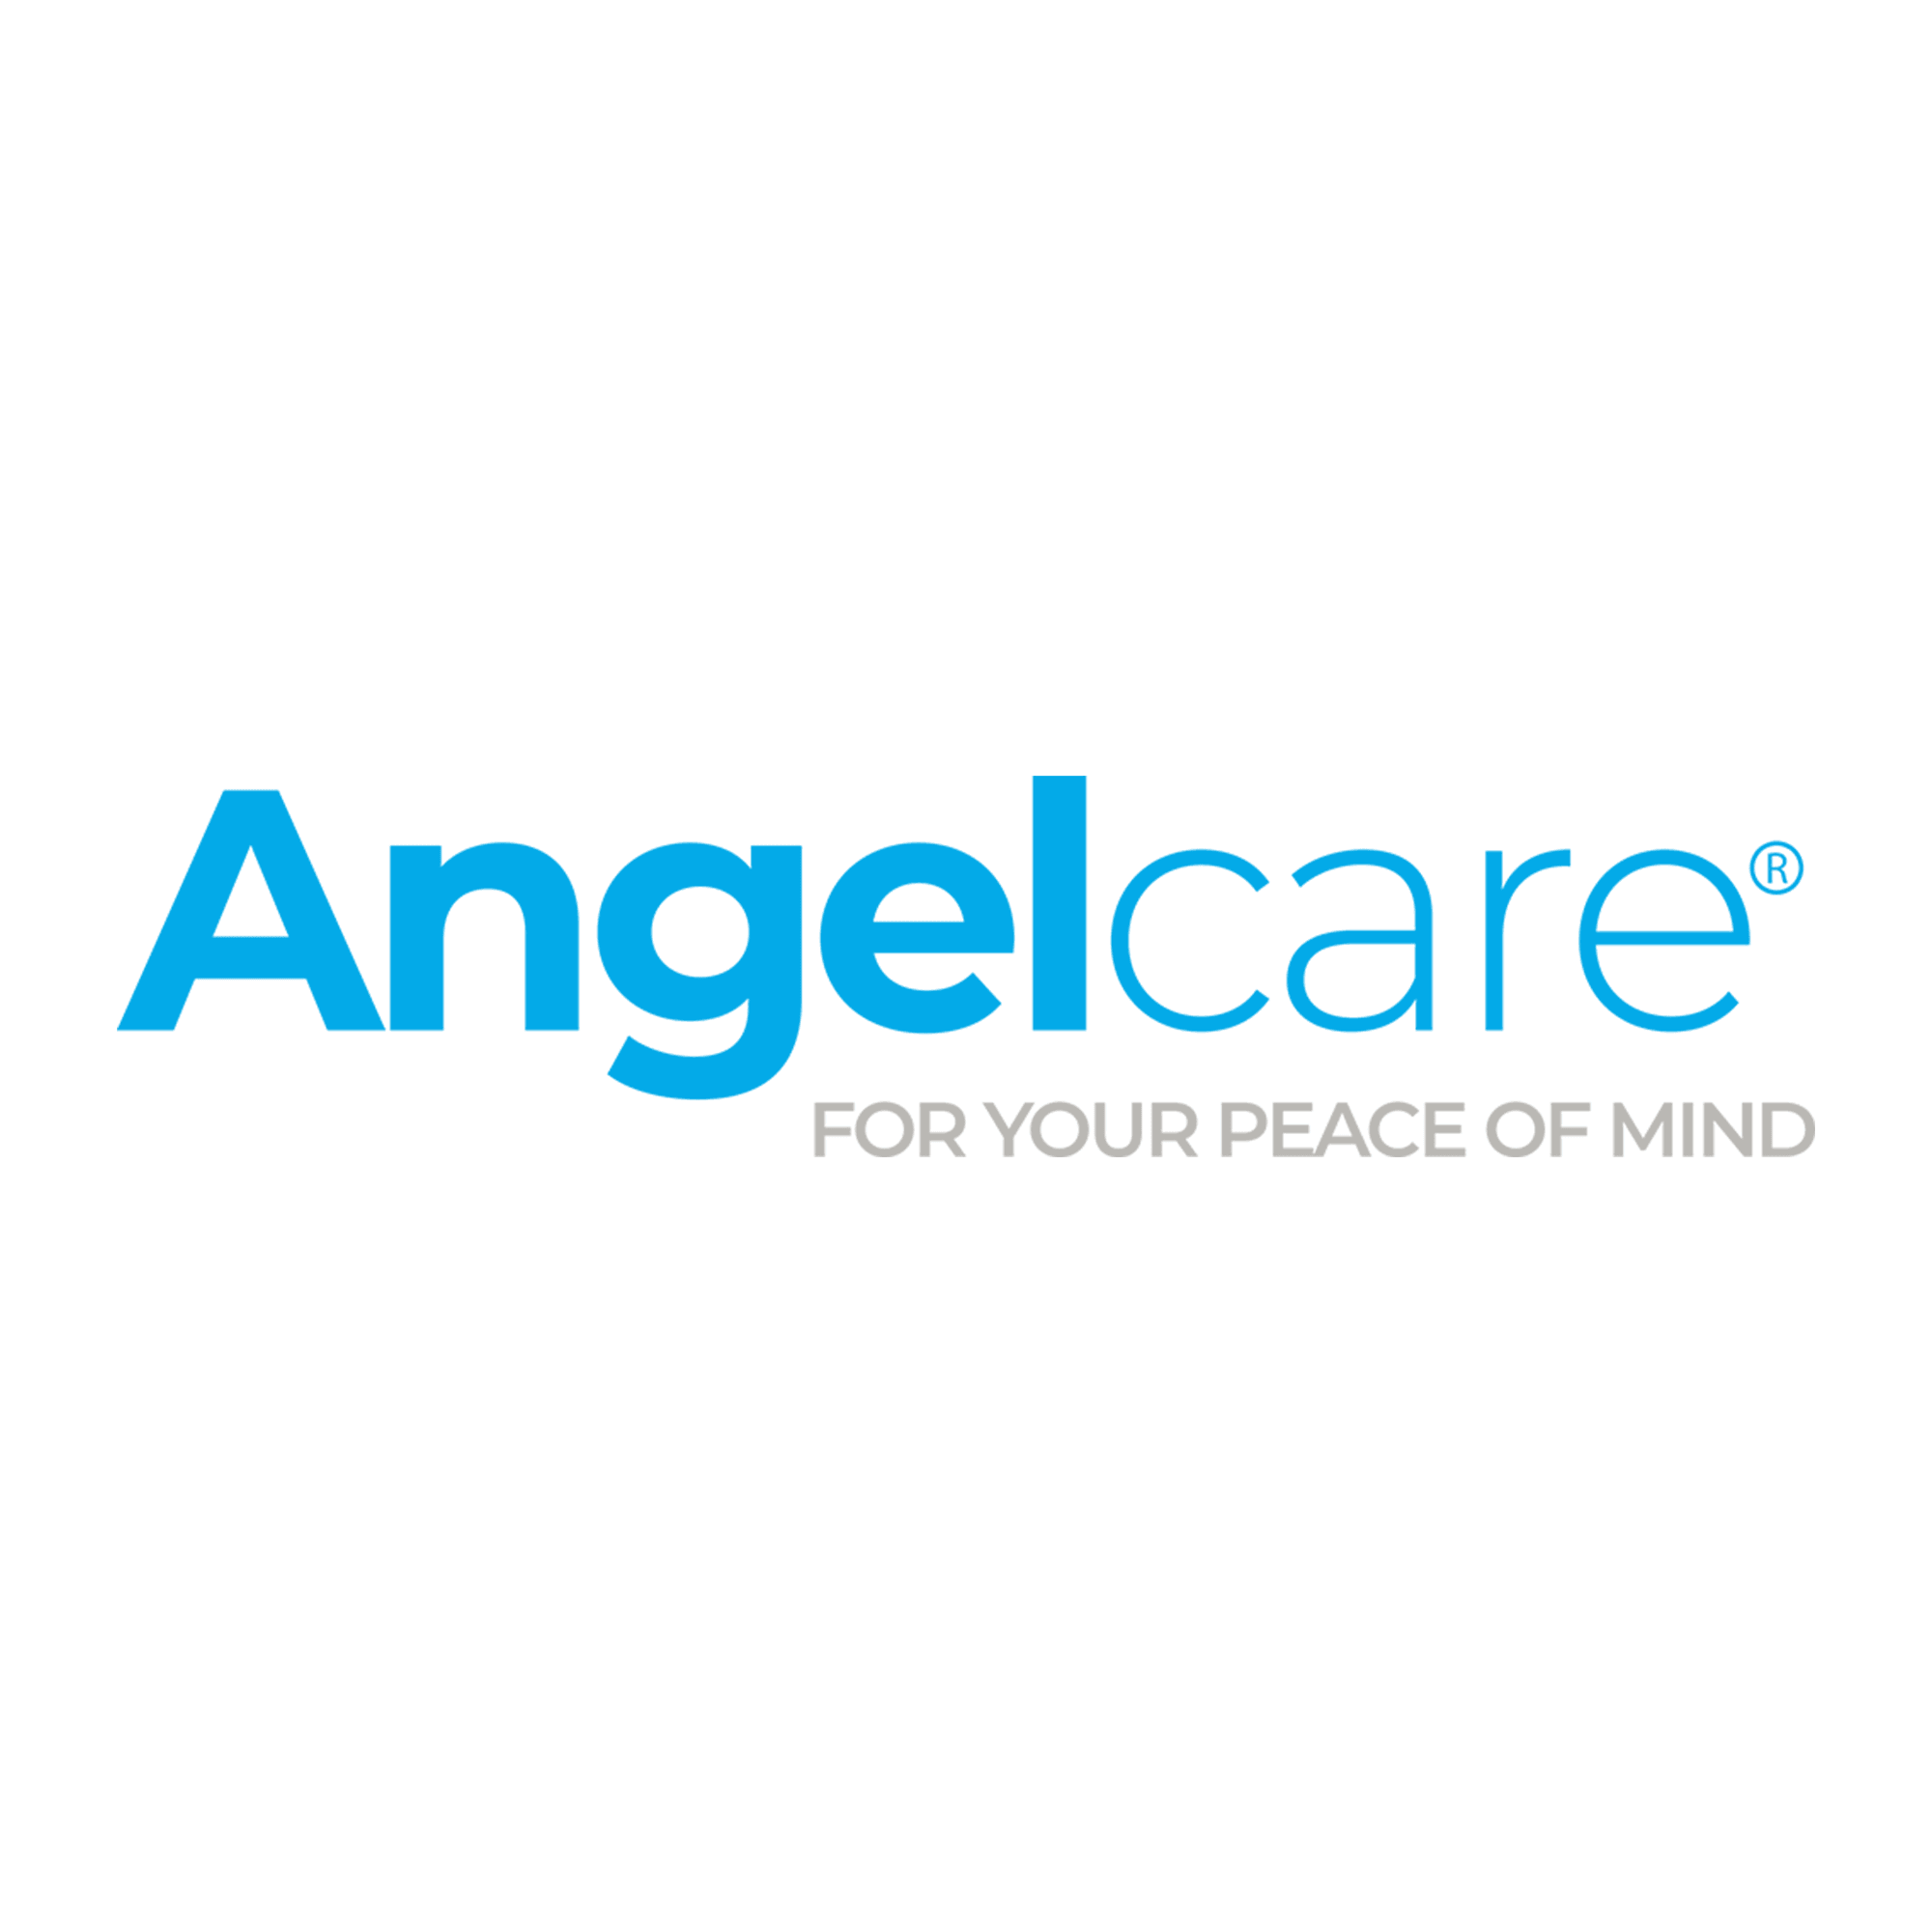 Angelcare – BabyBump Limited